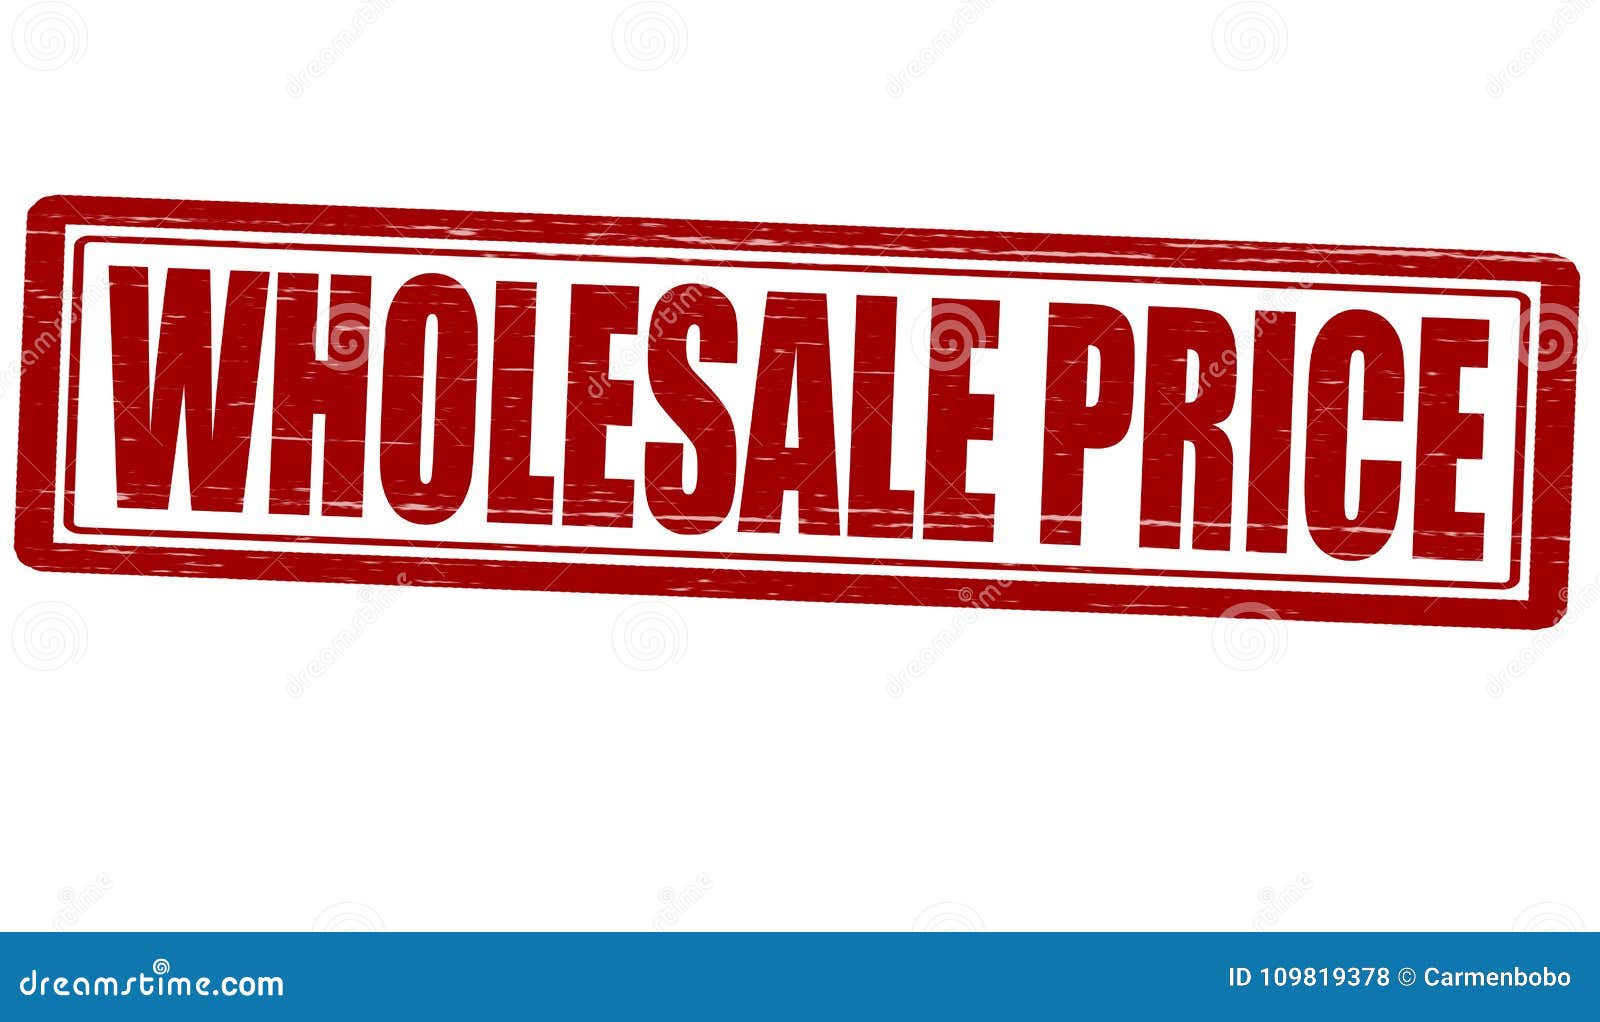 Wholesale price stock illustration. Illustration of rubber - 109819378